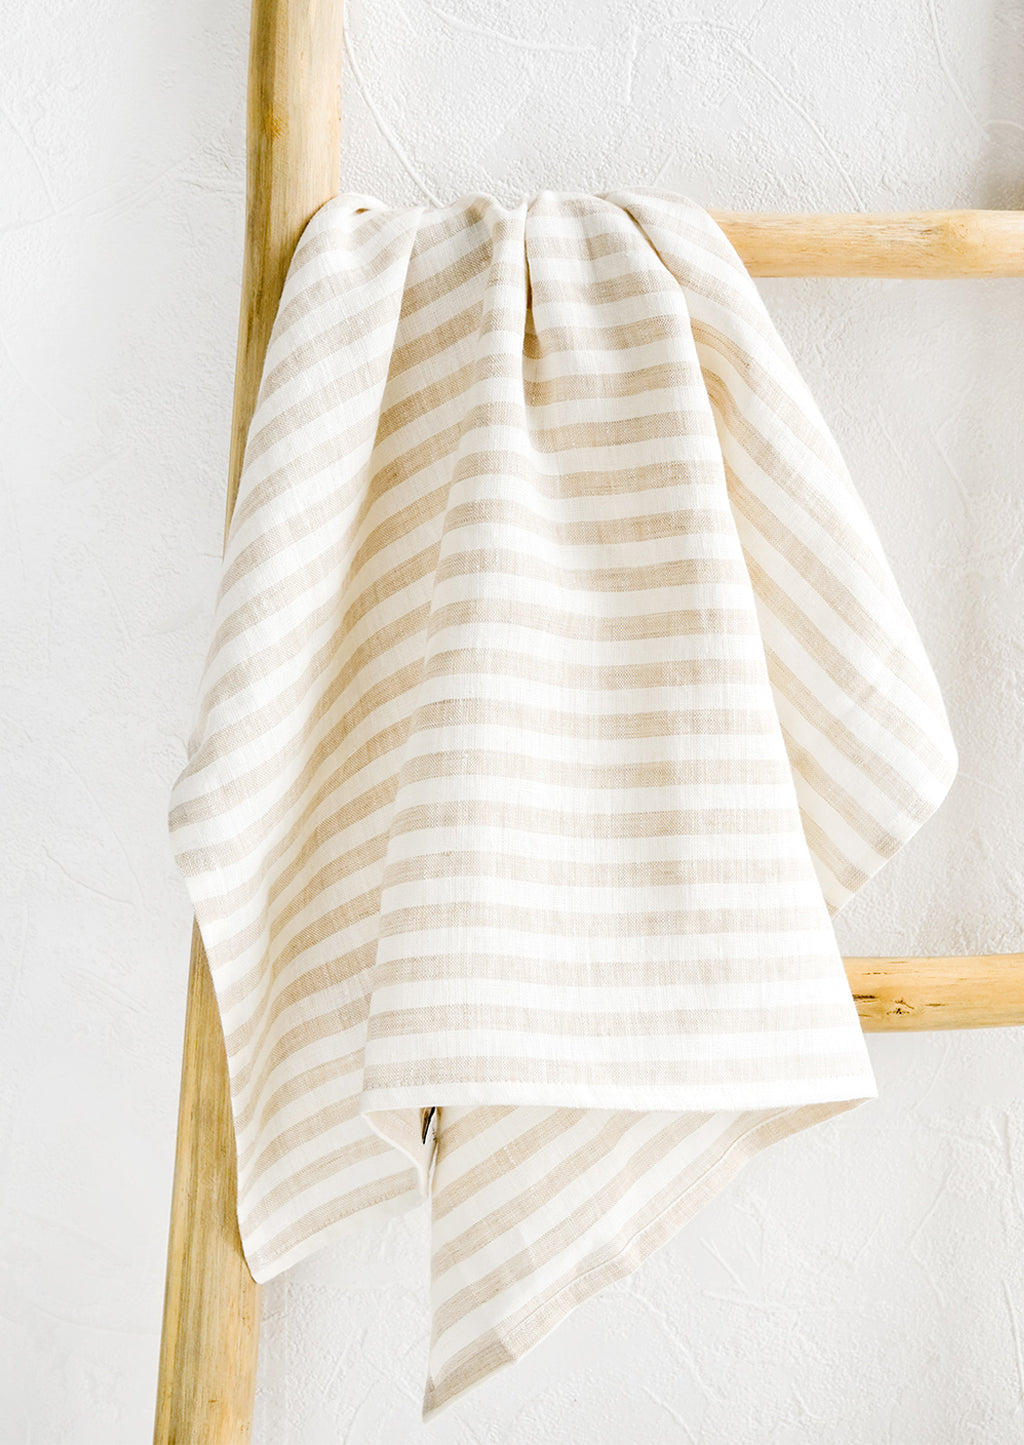 Natural Stripe: A tan striped linen tea towel draped on a wooden ladder.